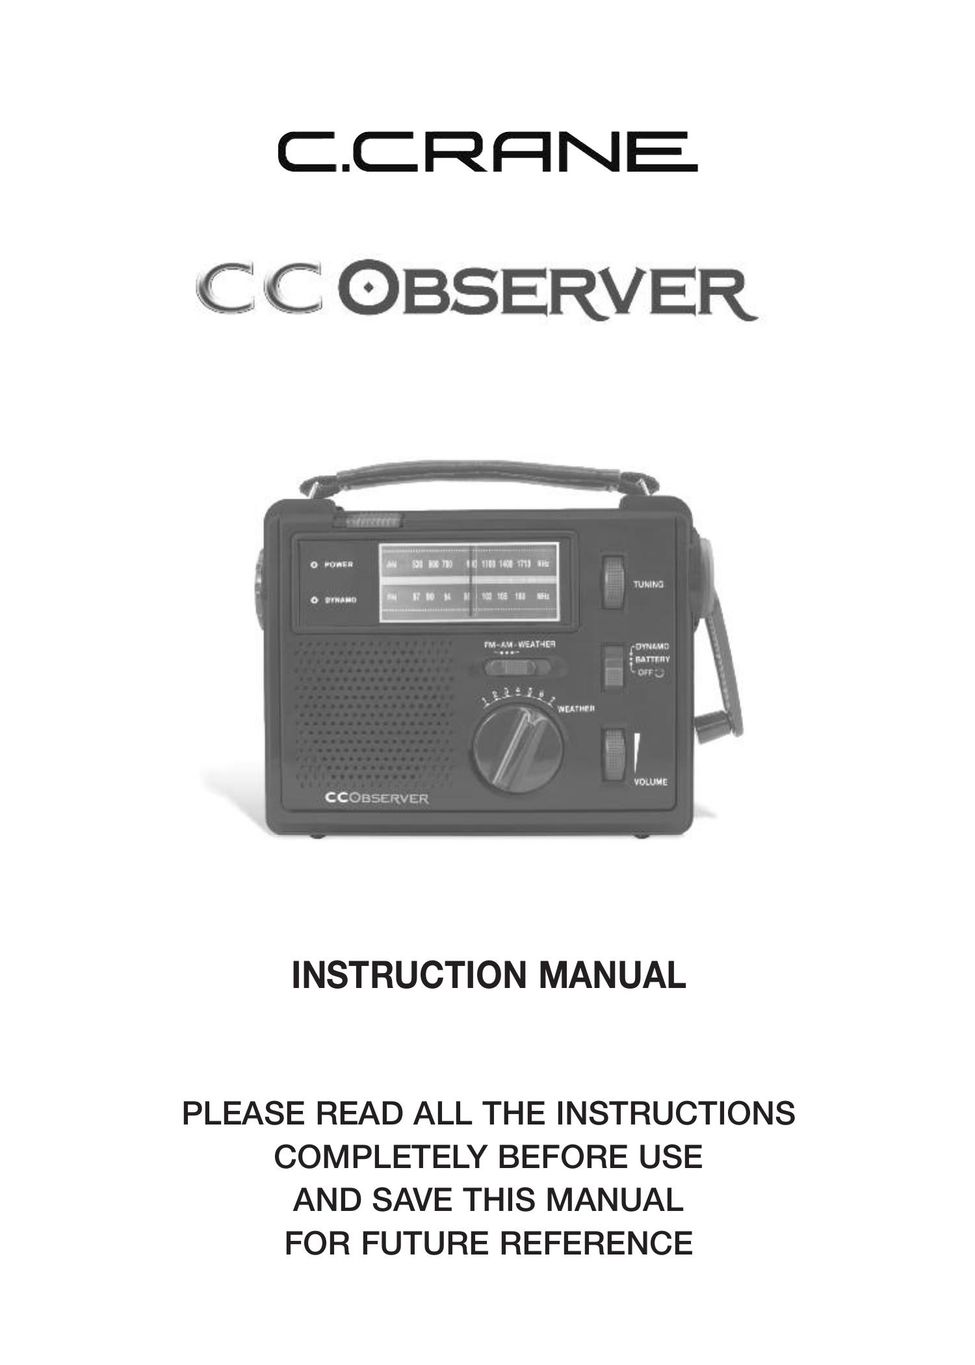 C. Crane CC Observer Portable Radio User Manual